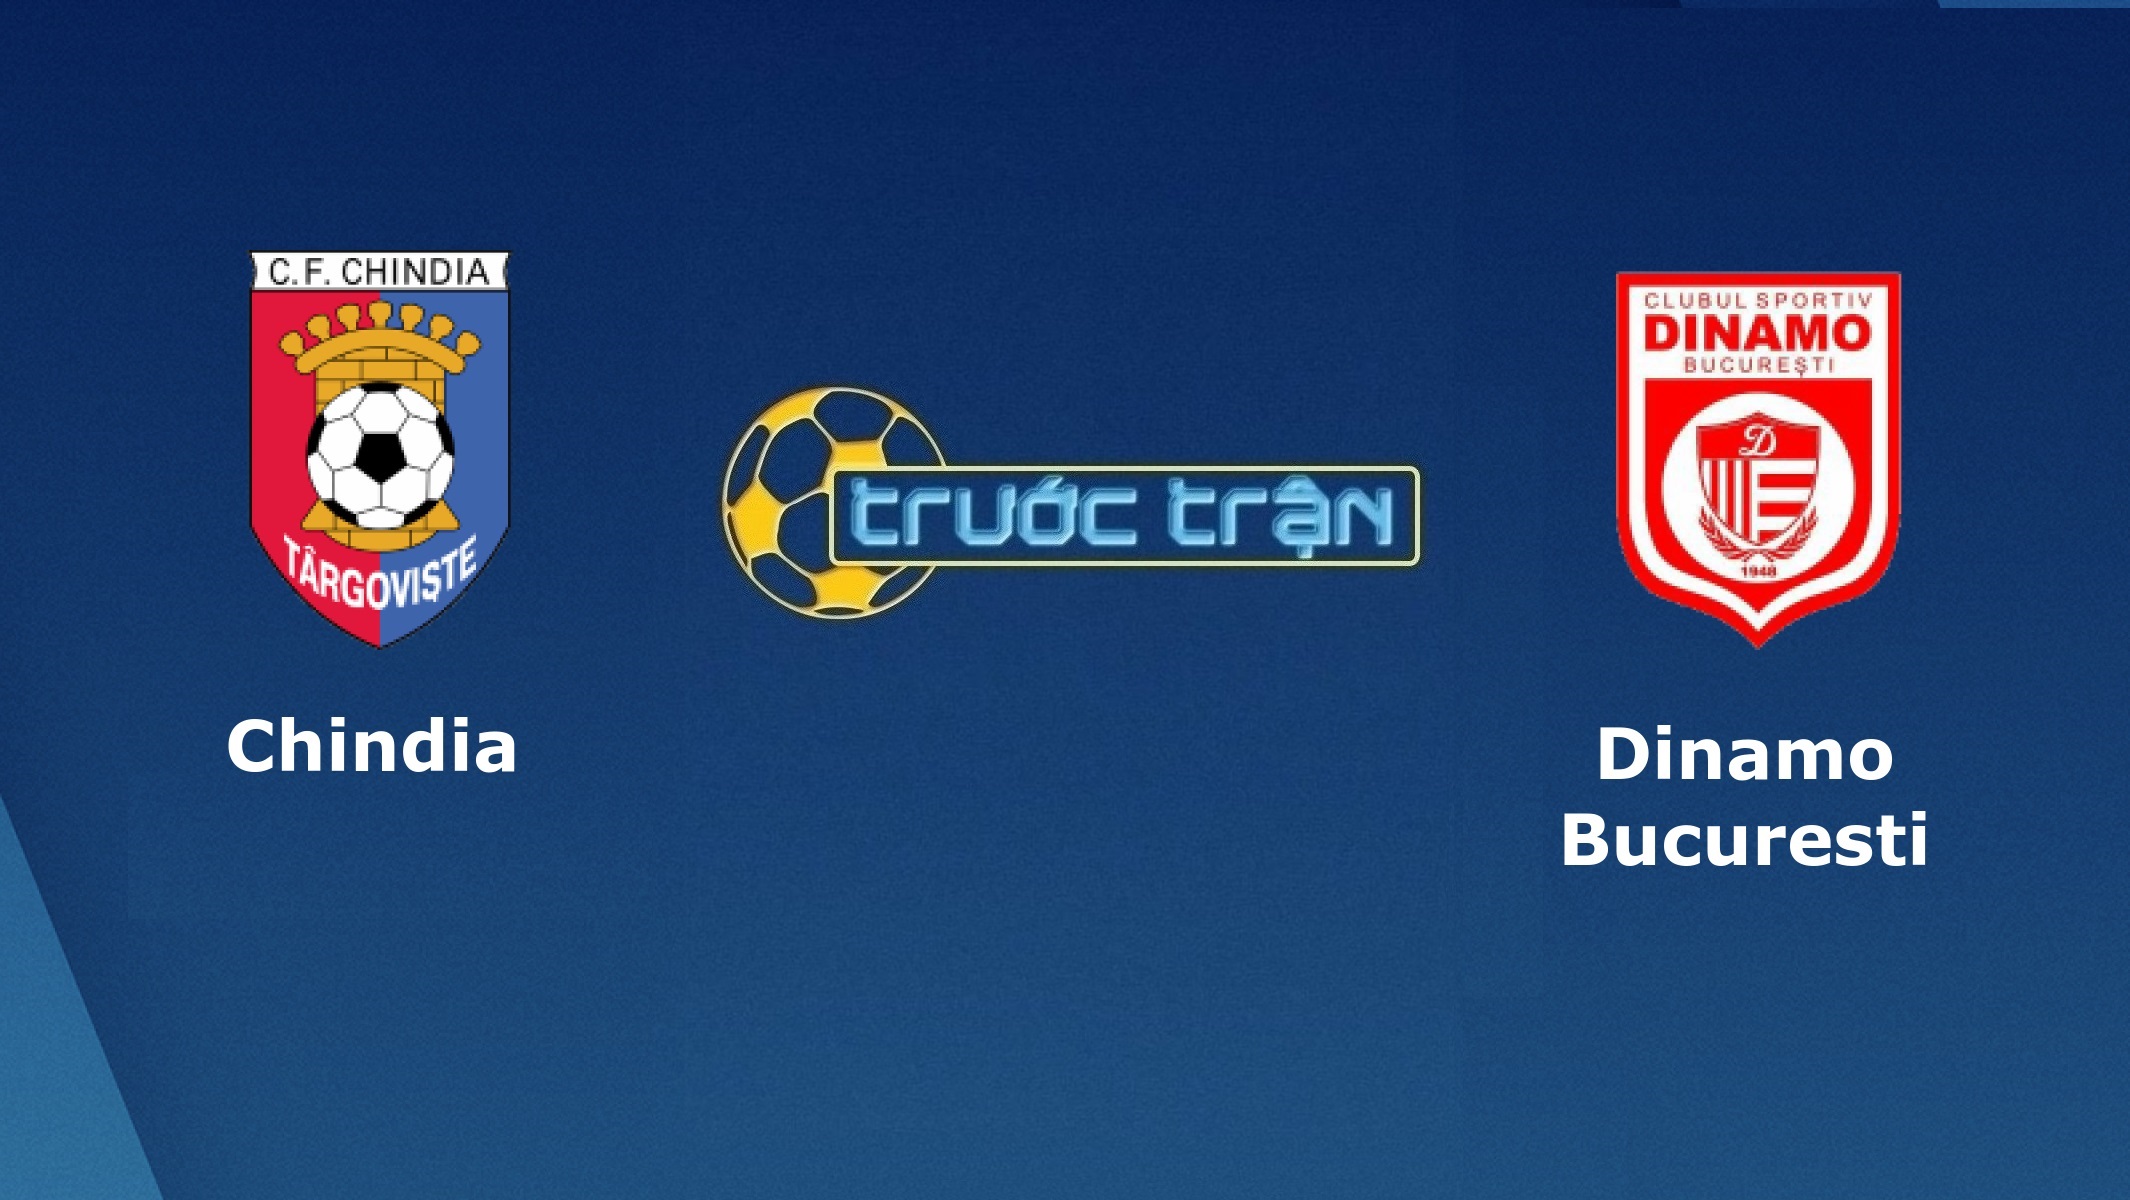 Chindia Targoviste vs Dinamo Bucuresti – Tip kèo bóng đá hôm nay – 01/09